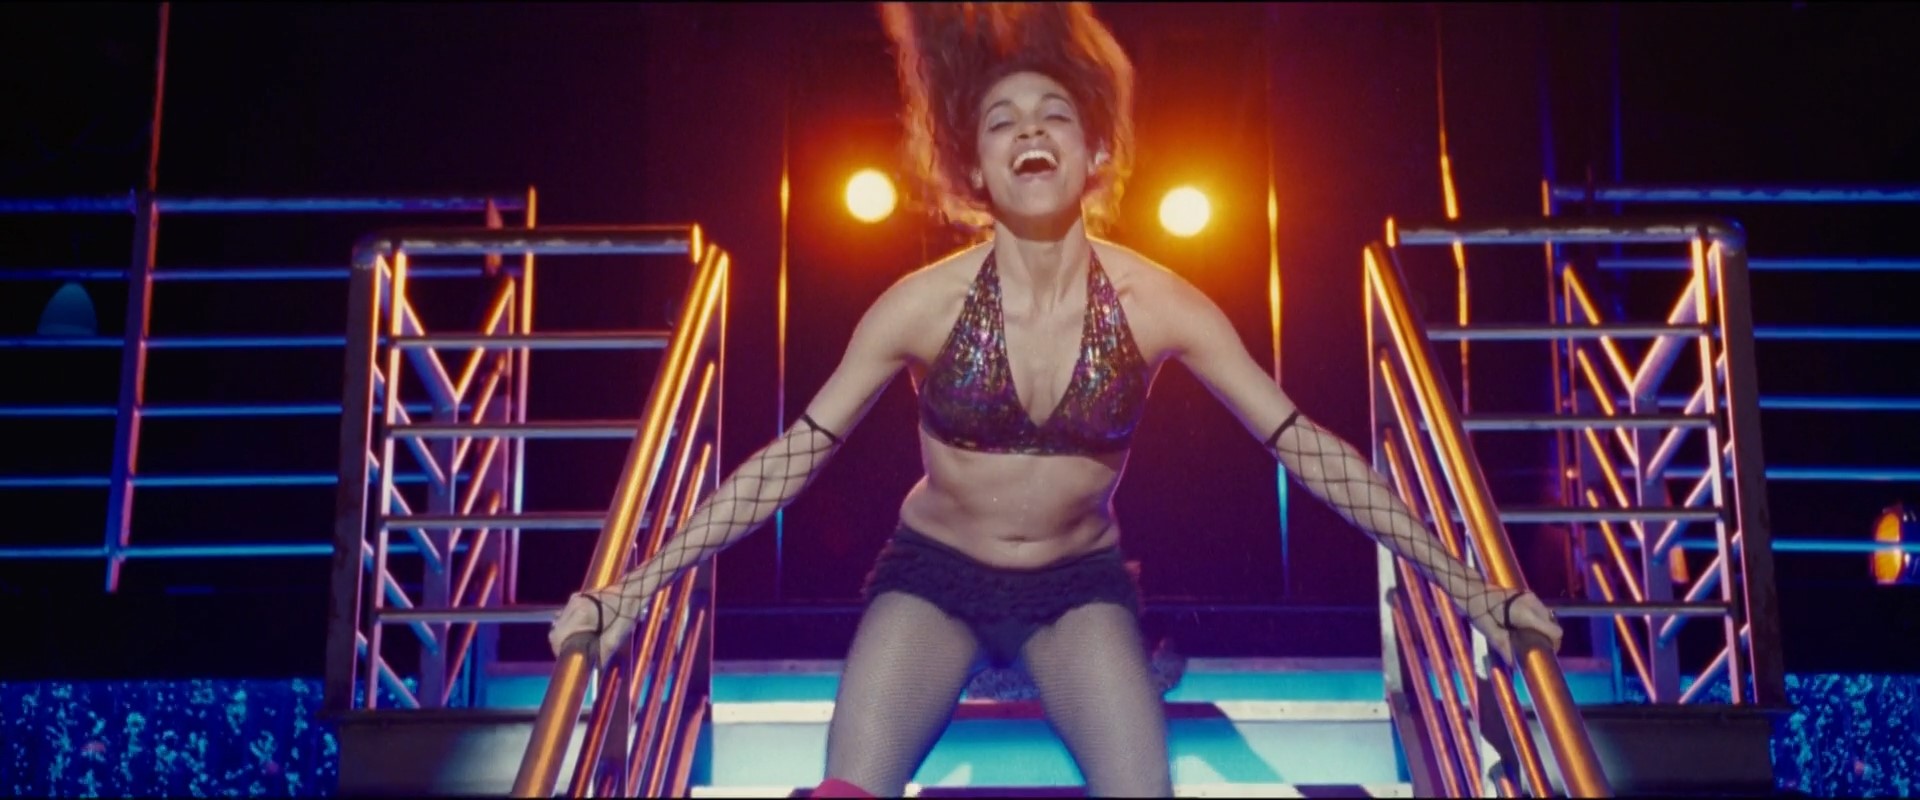 Rosario Dawson bikini, Rosario Dawson dancing, Idina Menzel nude, Idina Men...